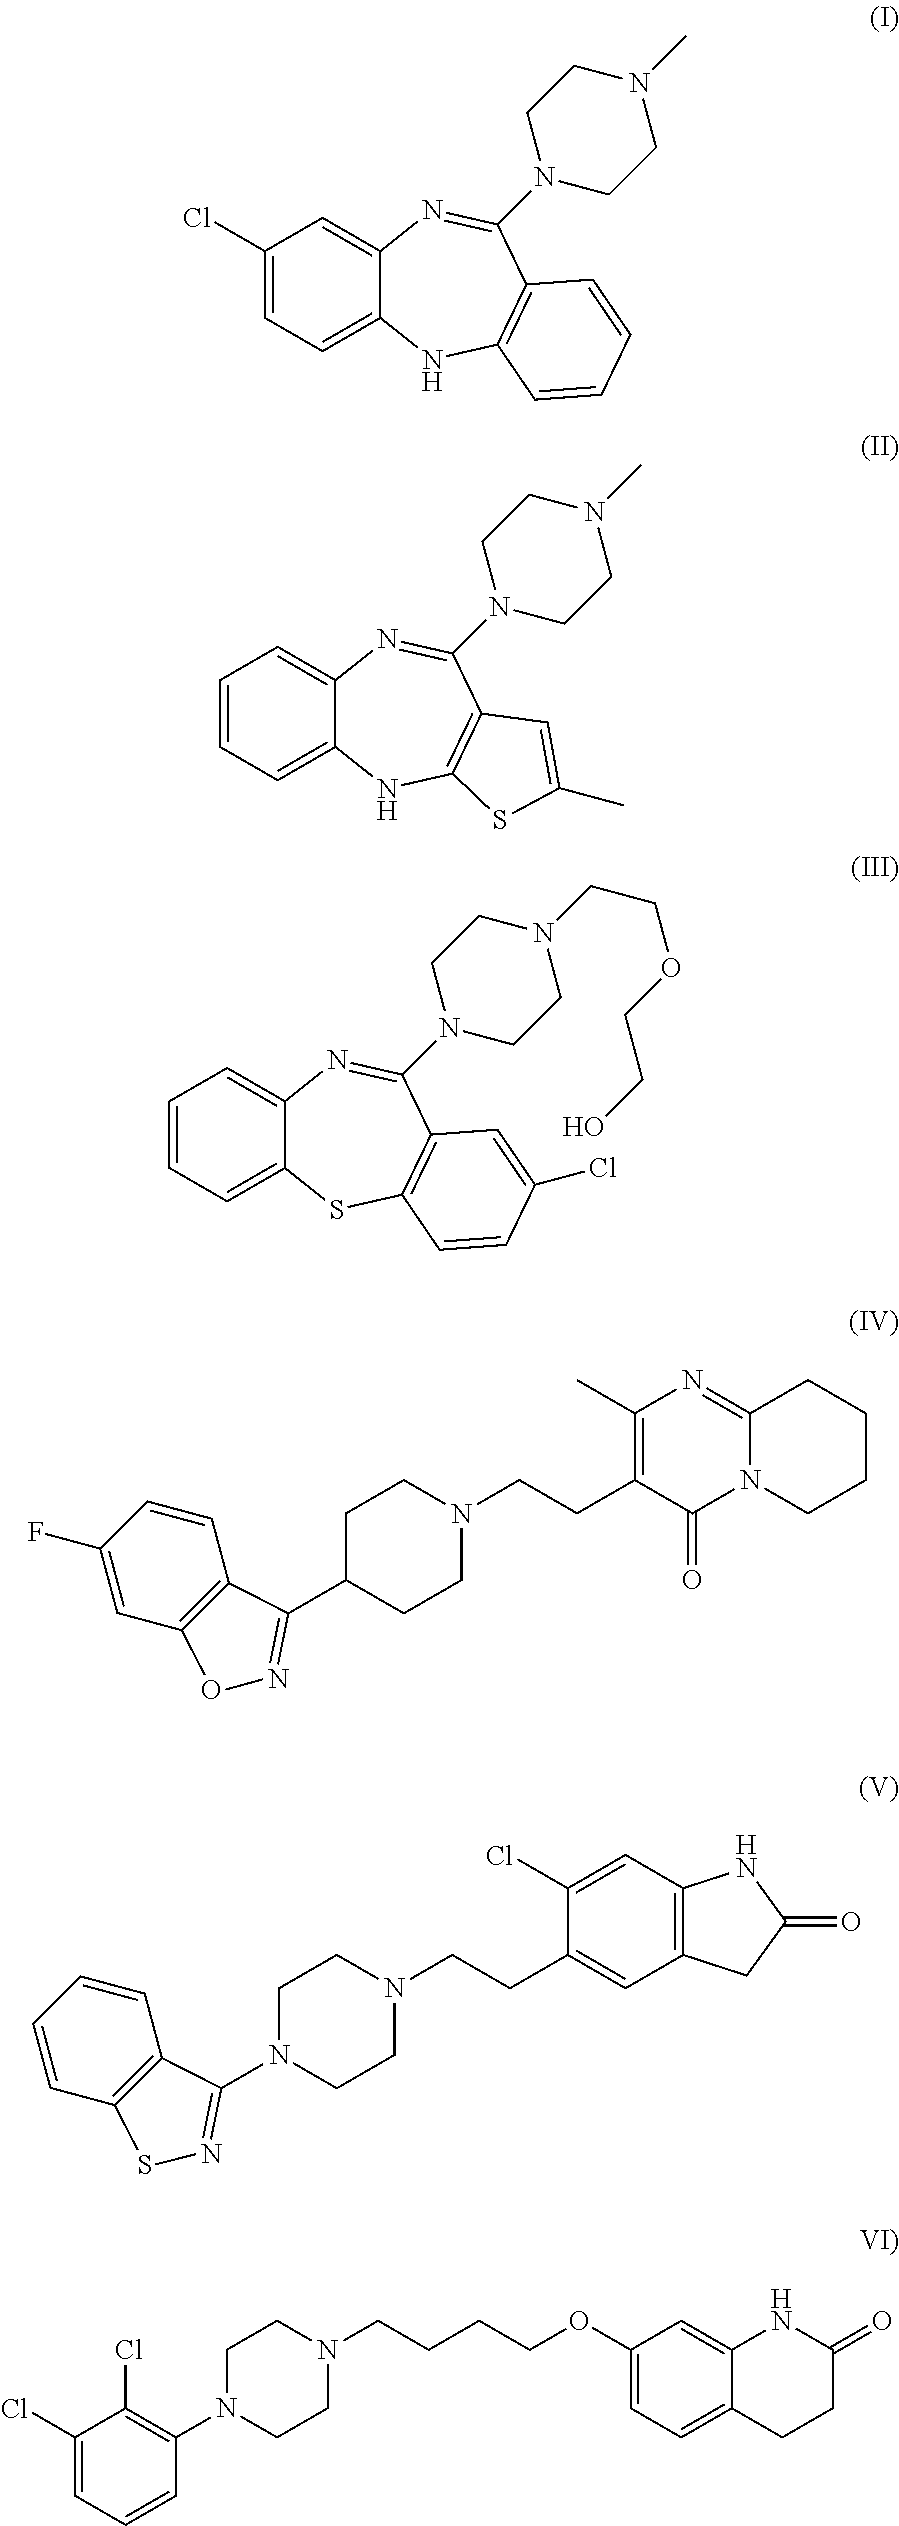 Derivatives of 7-fluoro-8-chloro-5H-dibenzo [B,E,] [1,4] diazepine and use thereof